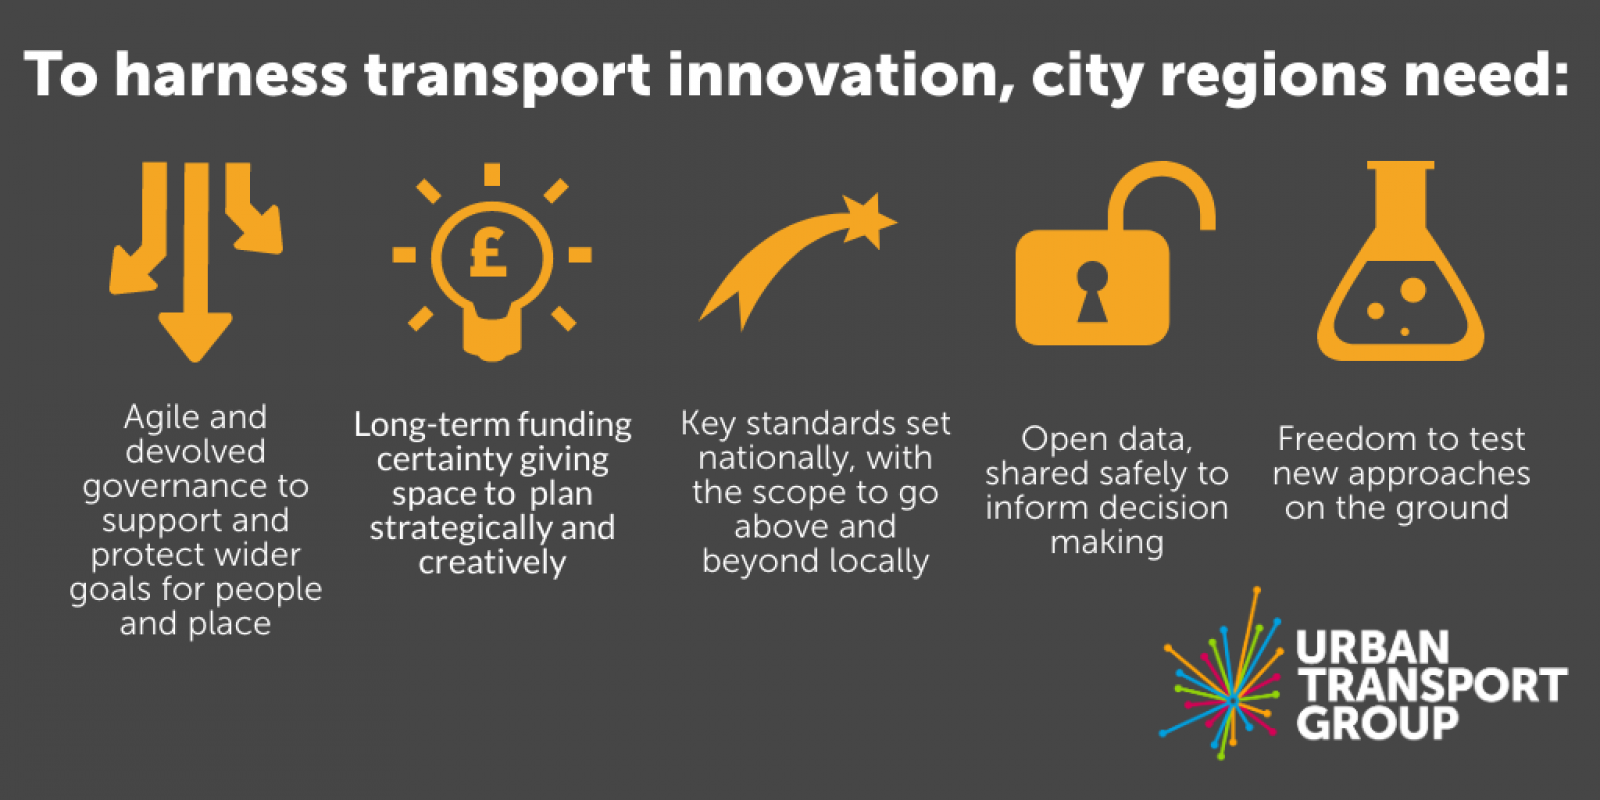 Foundations for transport innovation